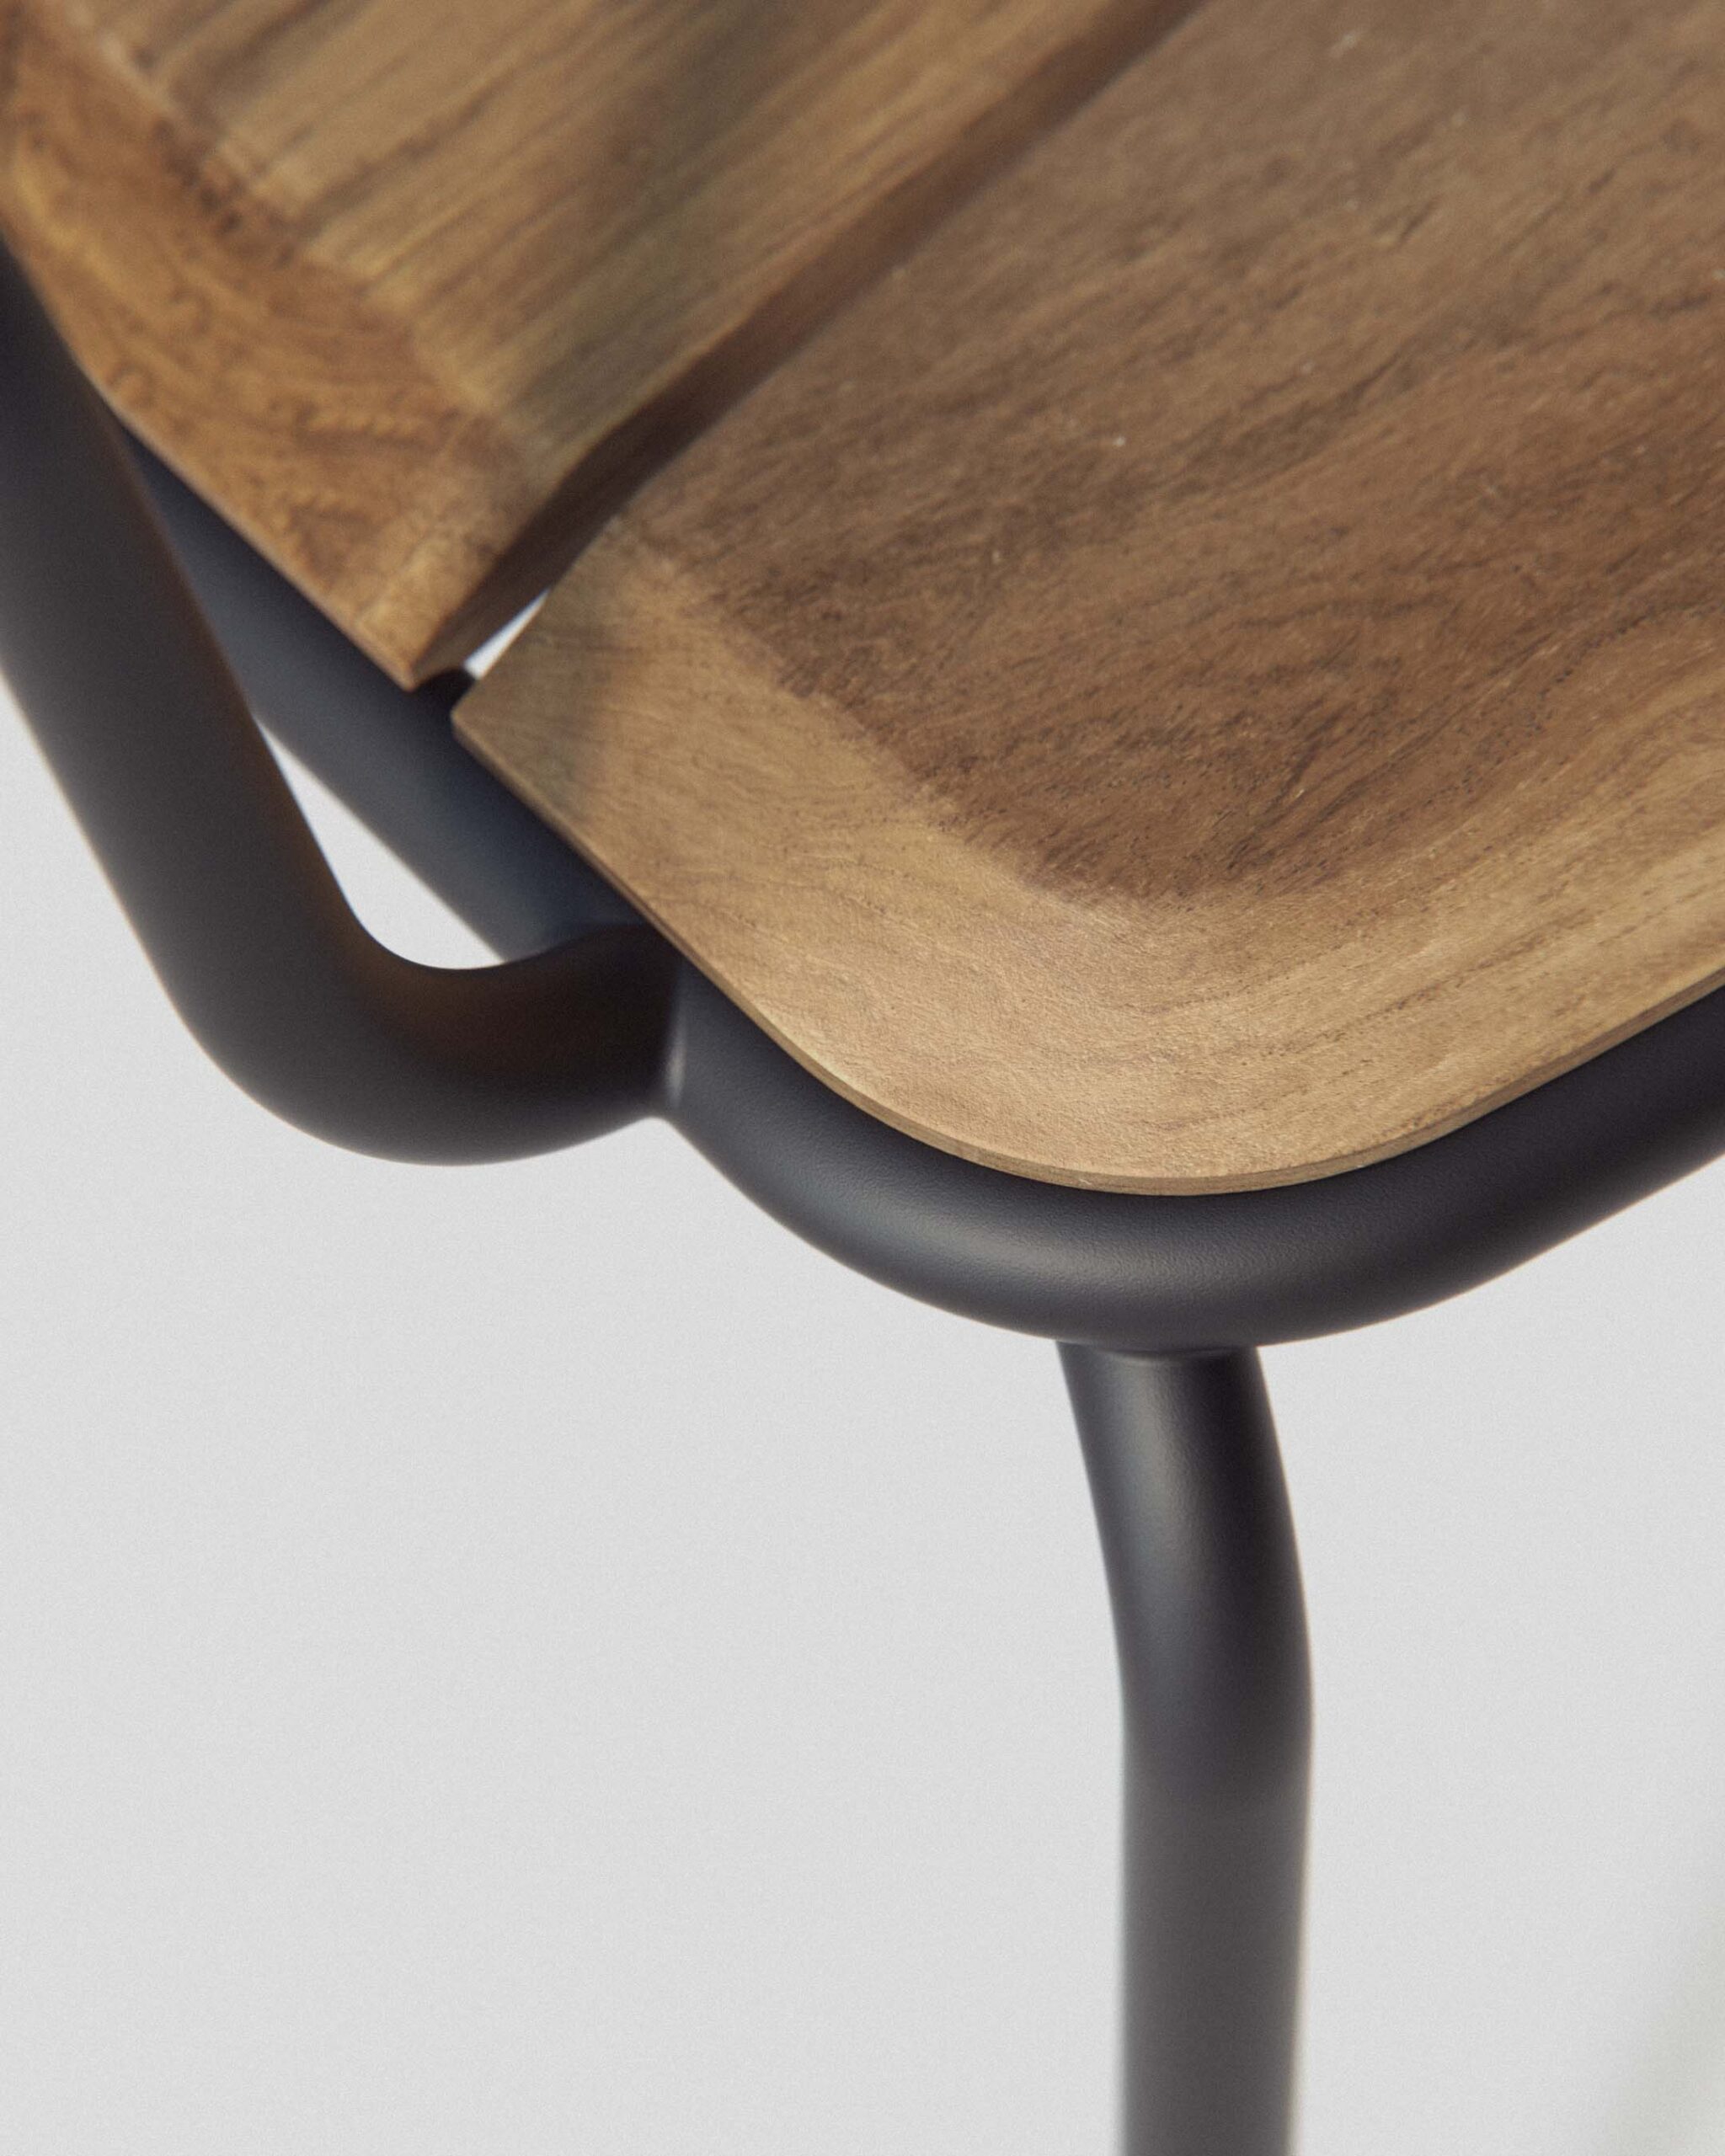 Andreas Bhend Industrial Design Studio TEAK Chair 04